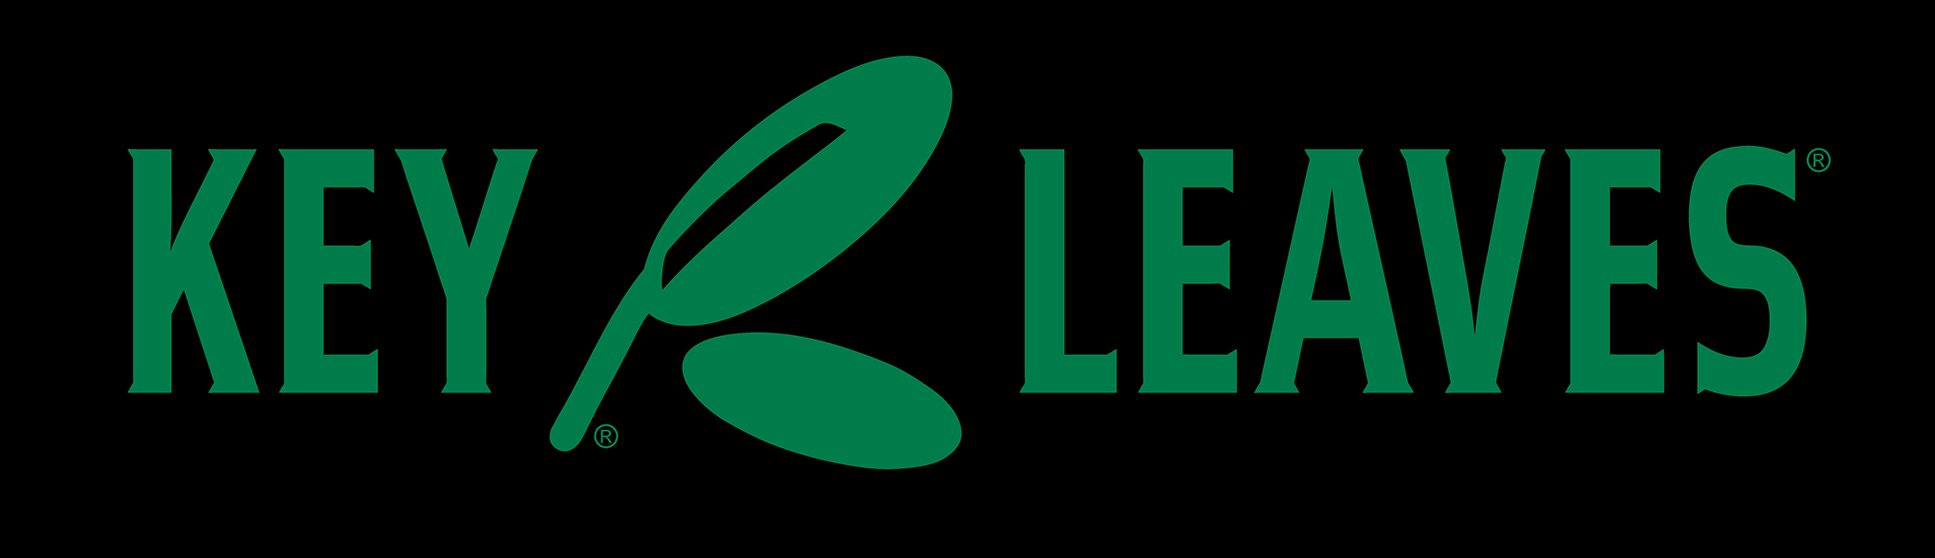 Key-Leaves-Logo.jpg